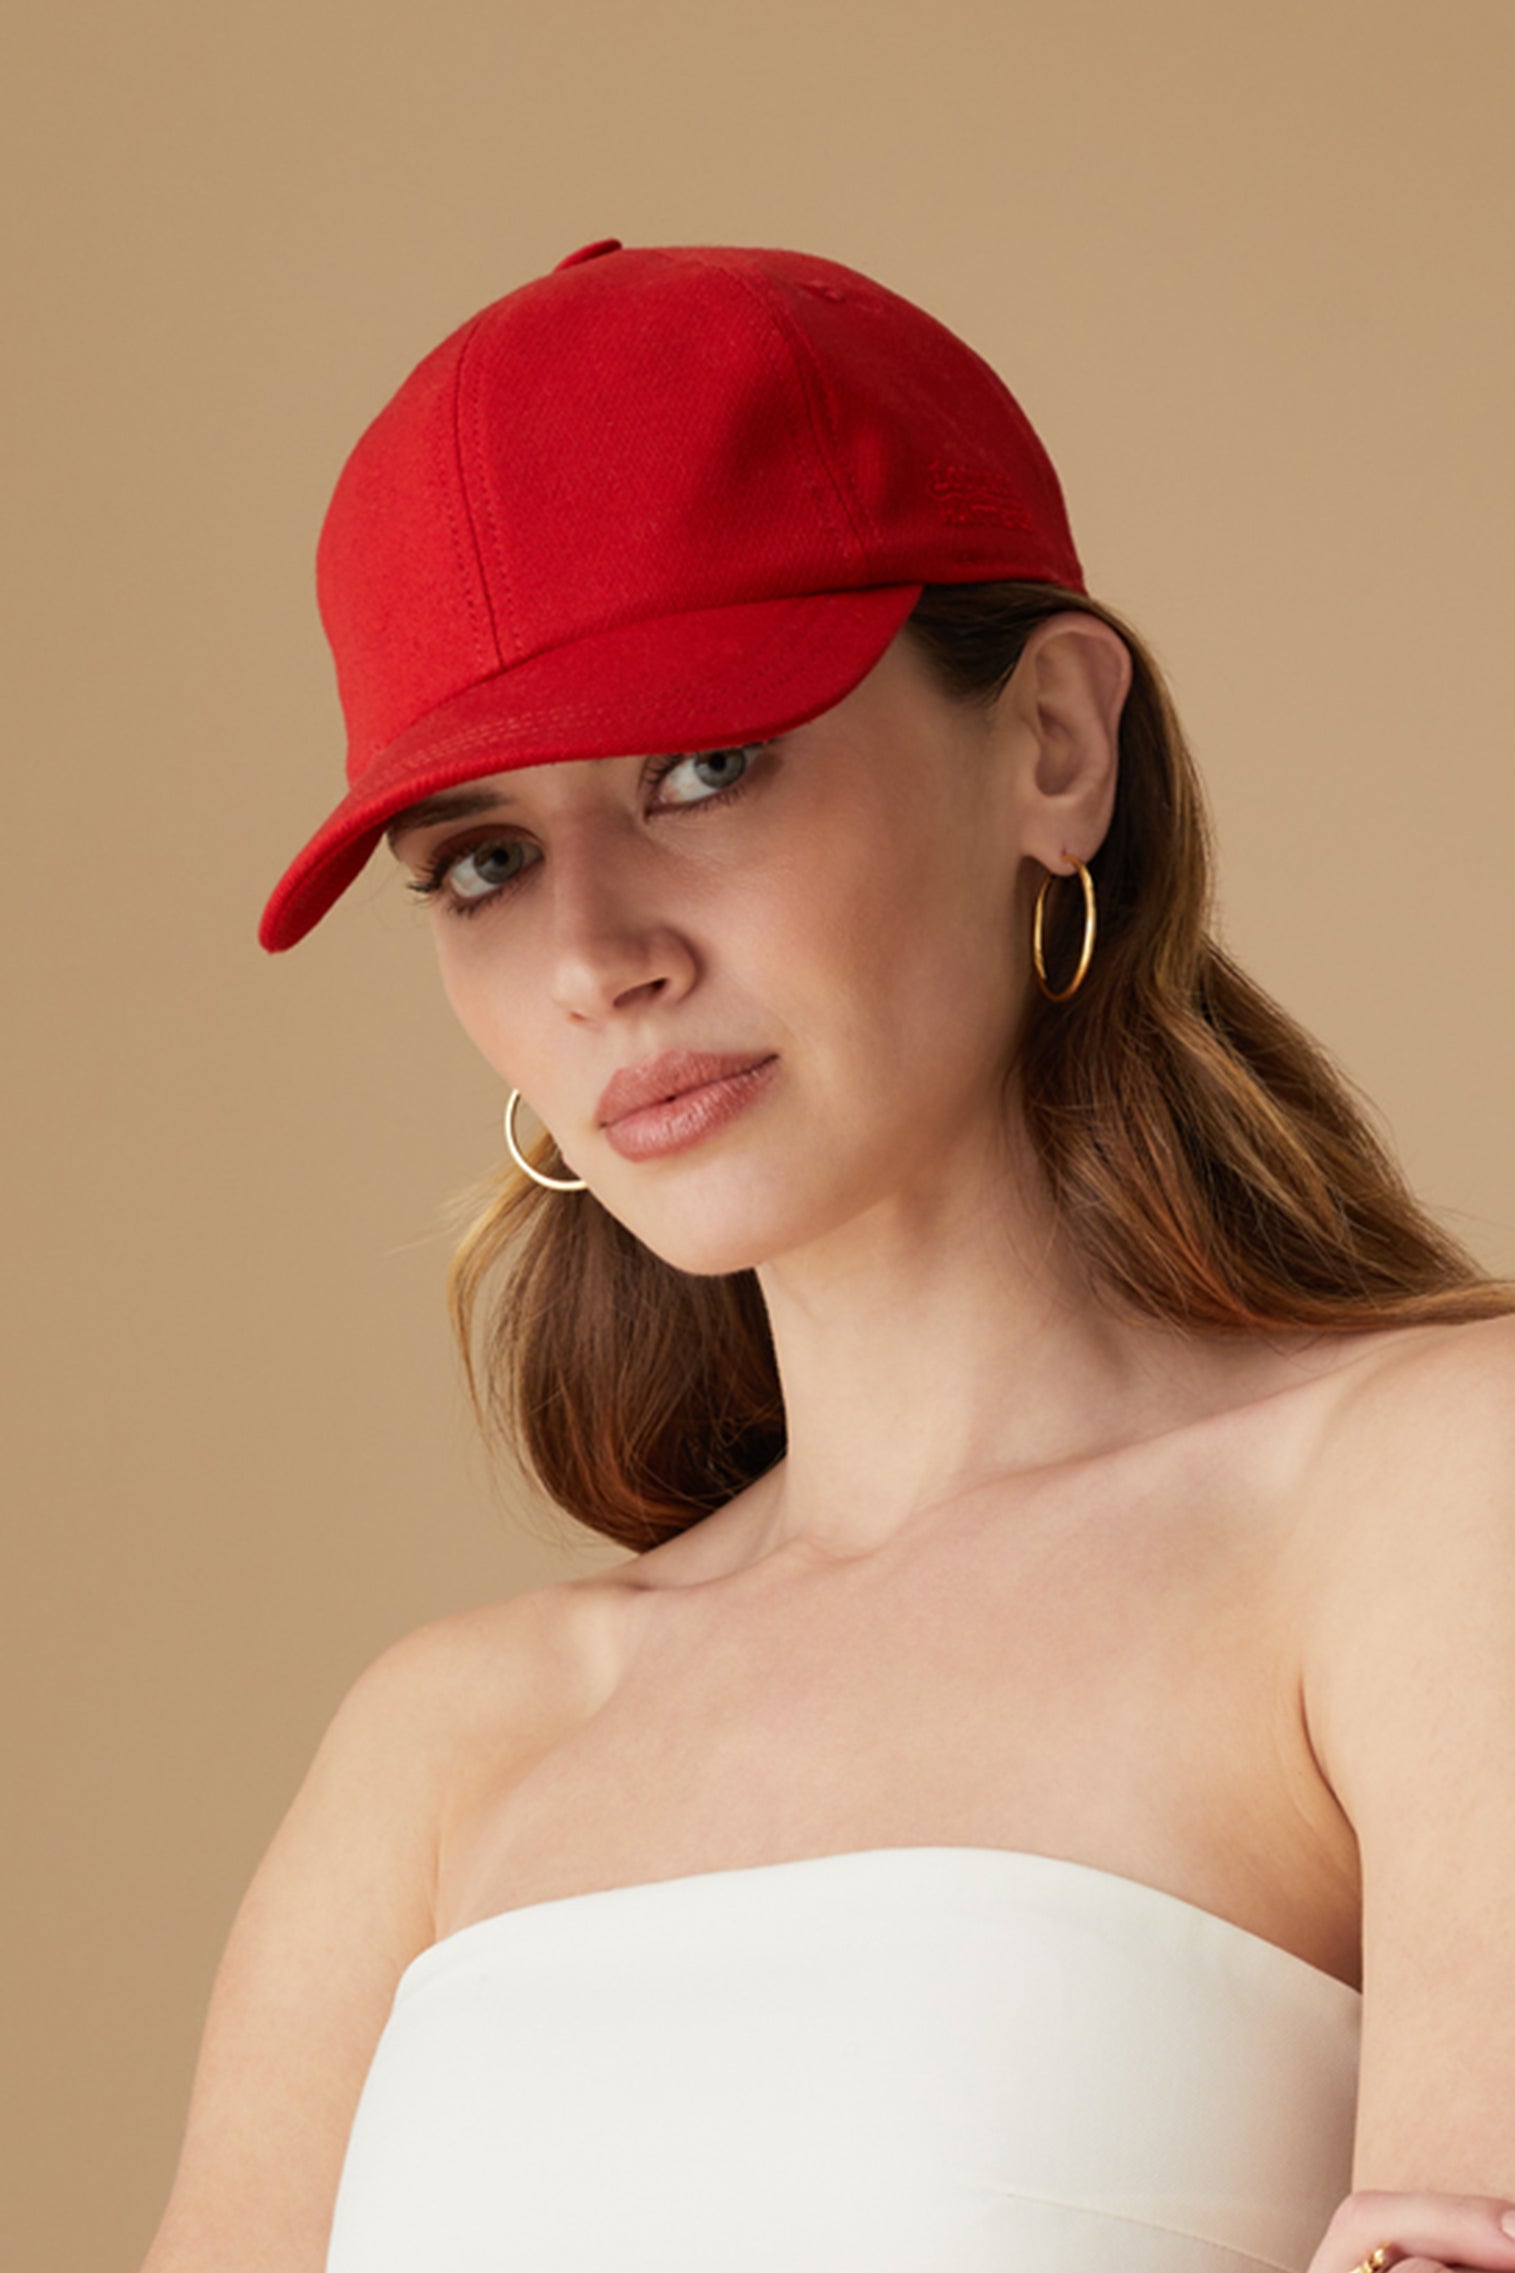 Adjustable Red Baseball Cap - New Season Hat Collection - Lock & Co. Hatters London UK